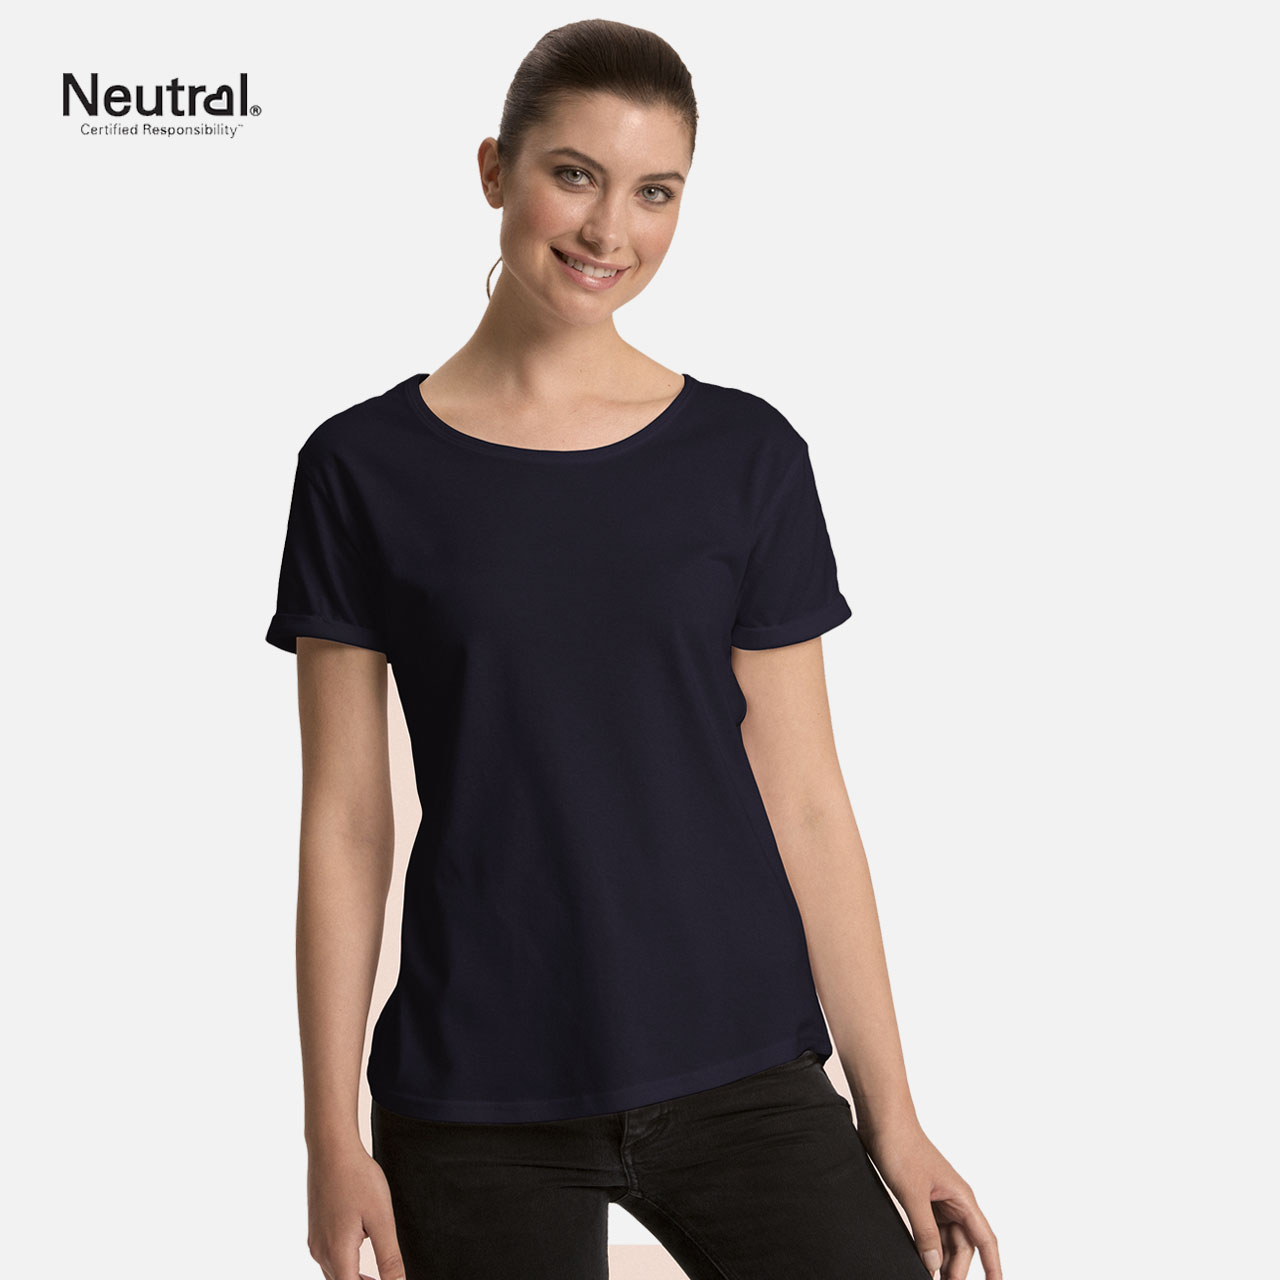 Doppelpack Ladies Roll Up Sleeve T-Shirt - Weiß / Navy XL Weiss / Navy